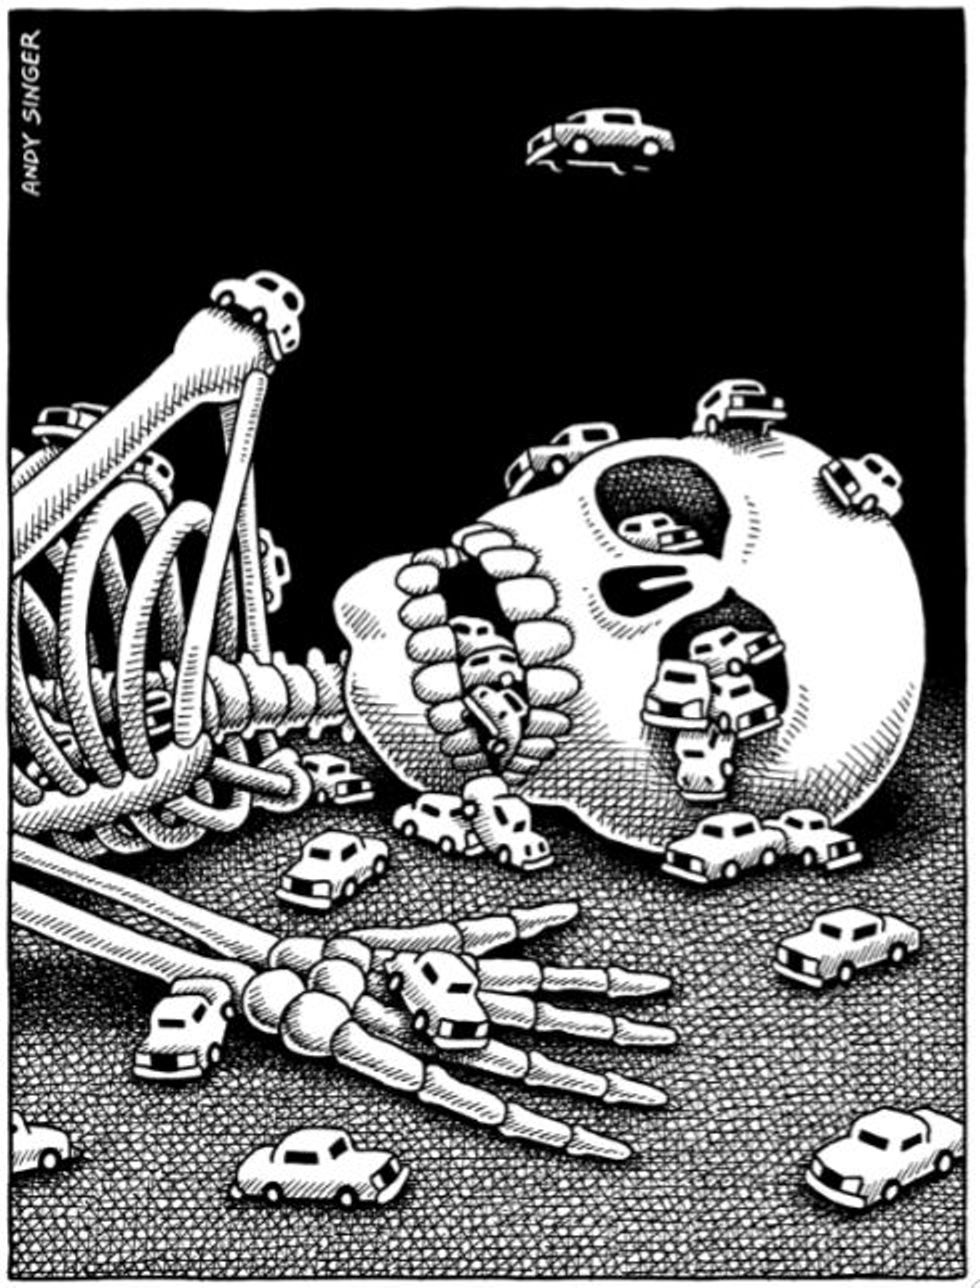 Andy Singer - Esquelet